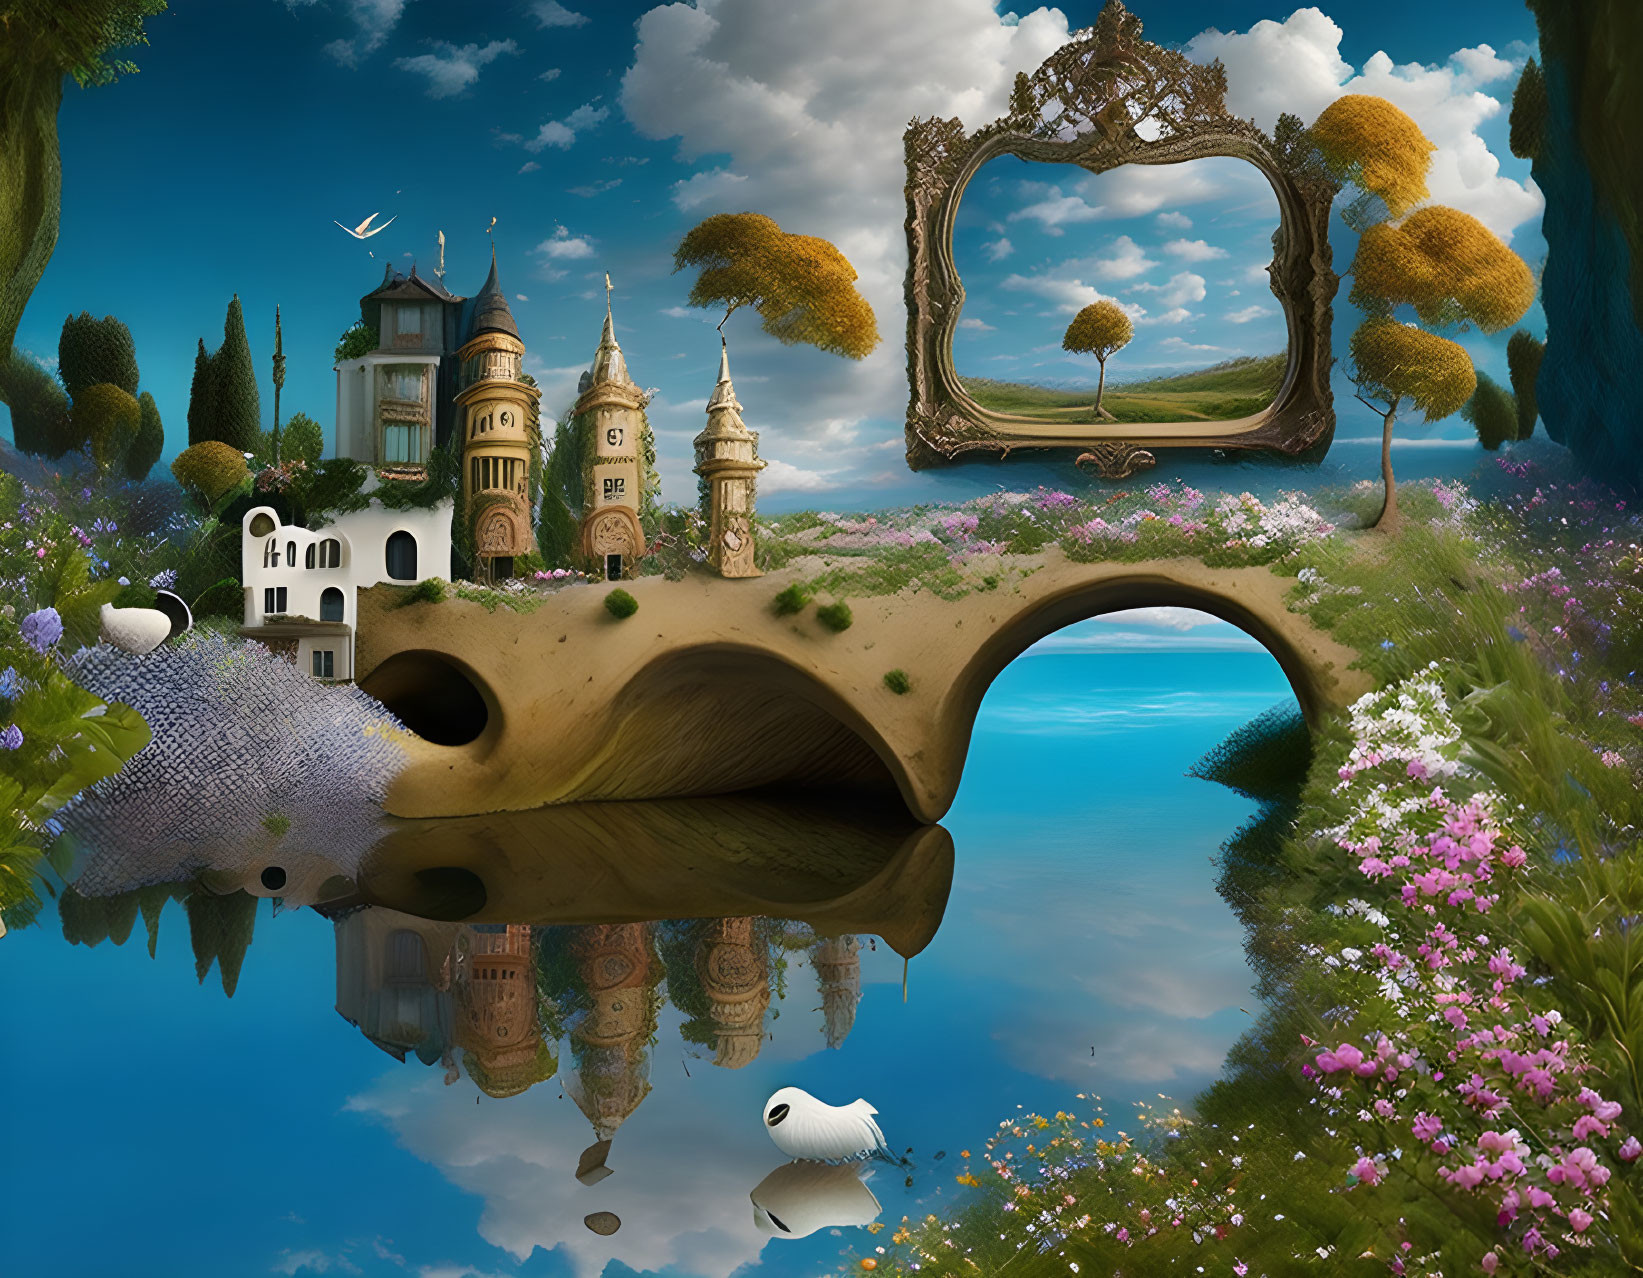 Surreal fairytale landscape with castles, mirror bridge, swans, and colorful flora